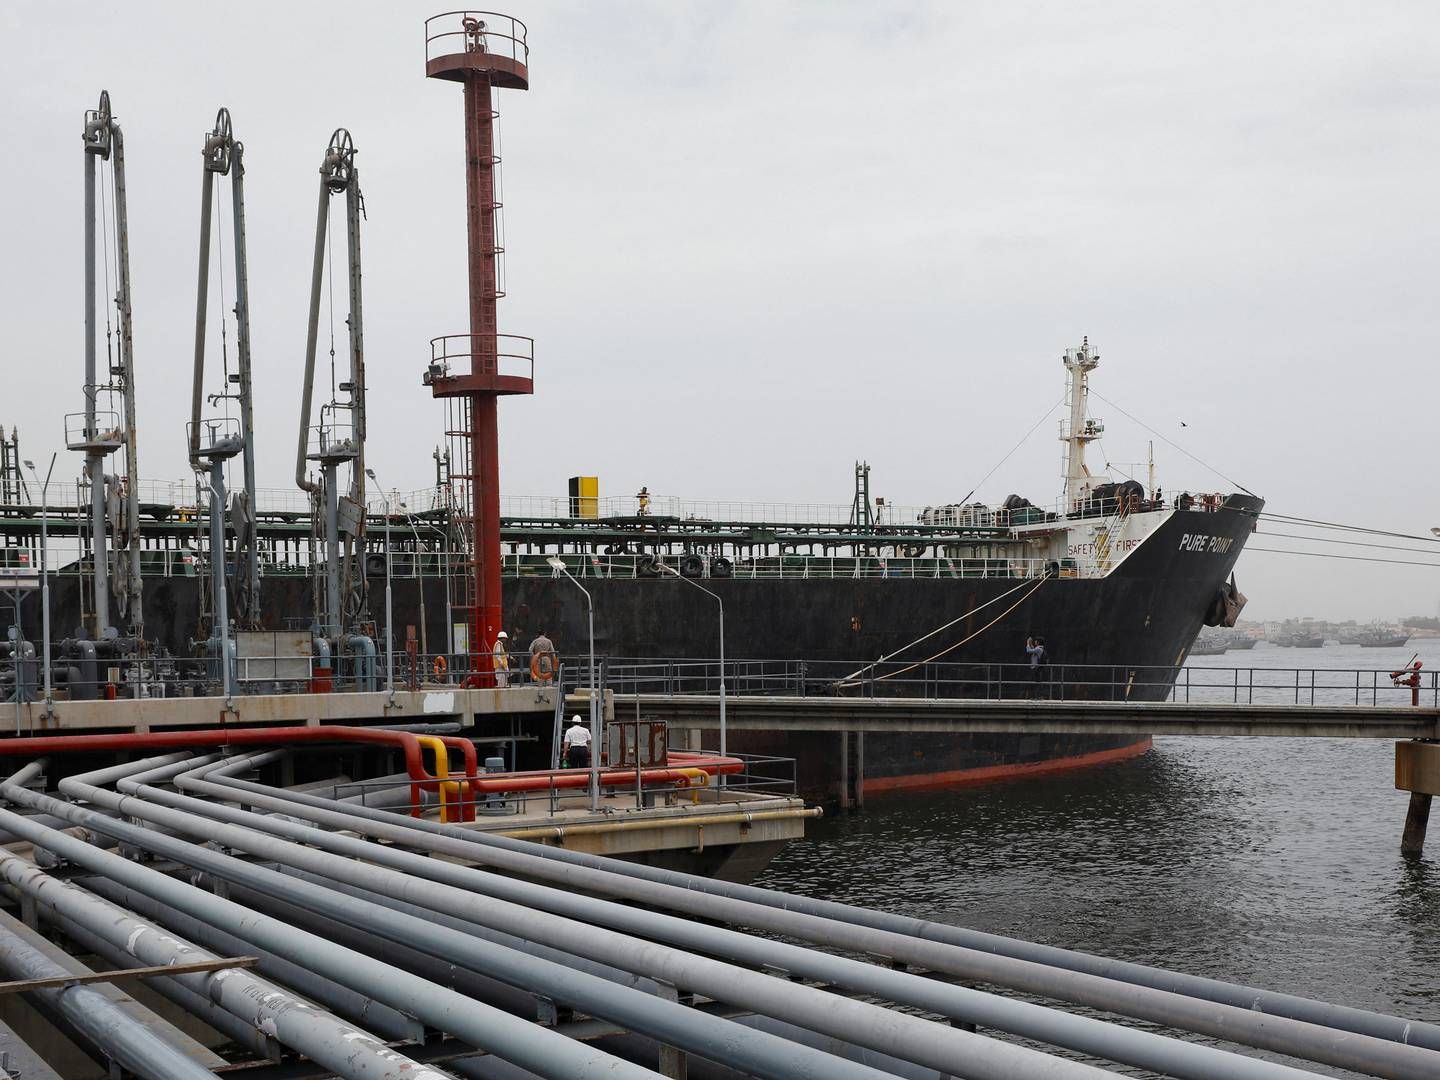 Russian oil cargo Pure Point, carrying crude oil. | Photo: Akhtar Soomro/Reuters/Ritzau Scanpix